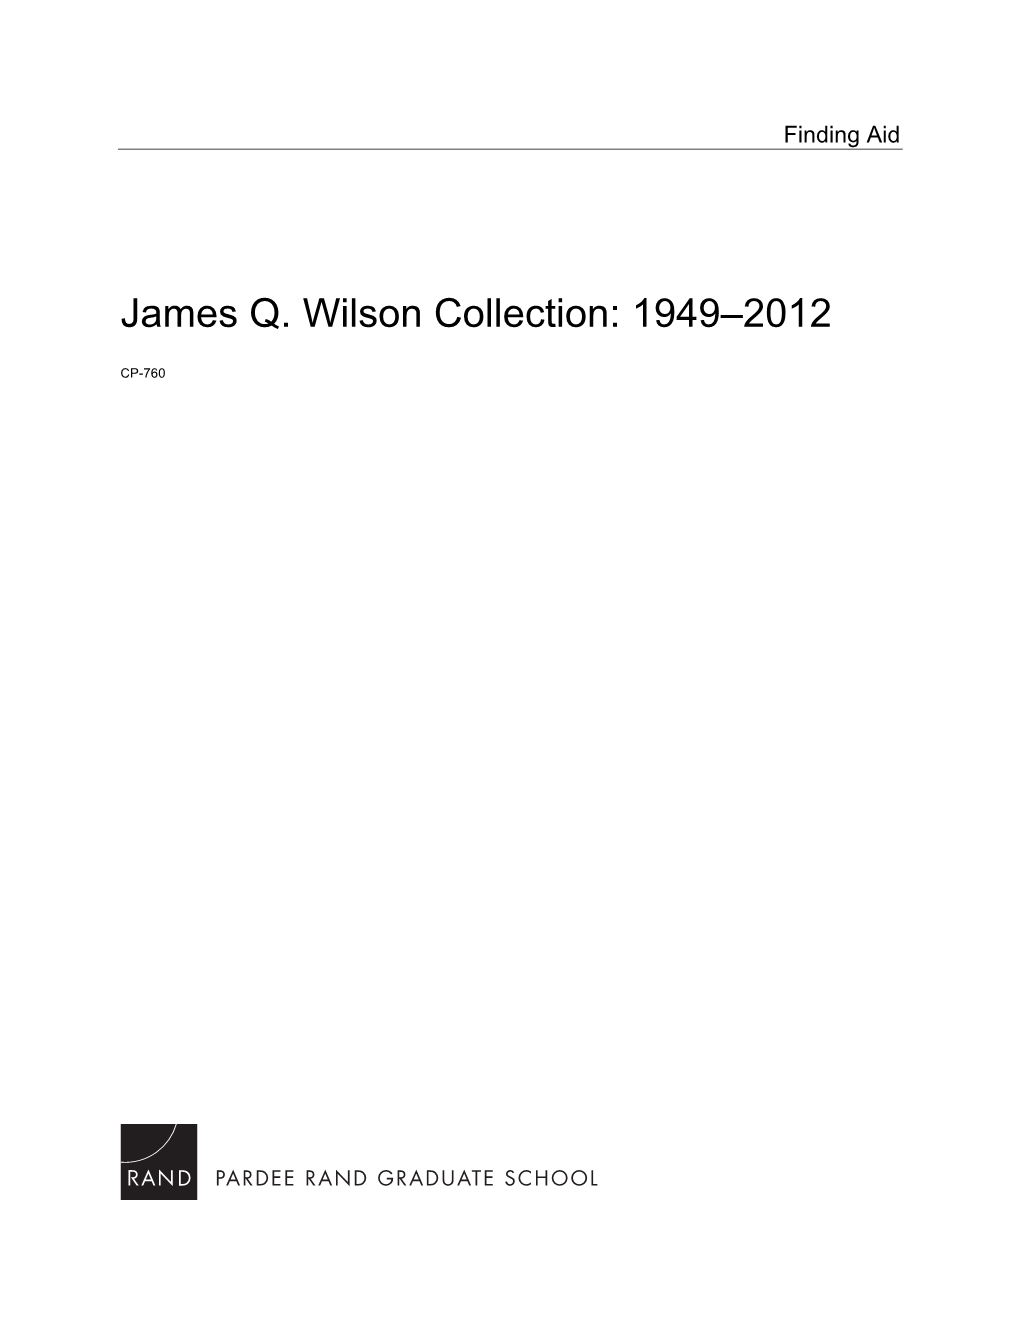 James Q. Wilson Papers